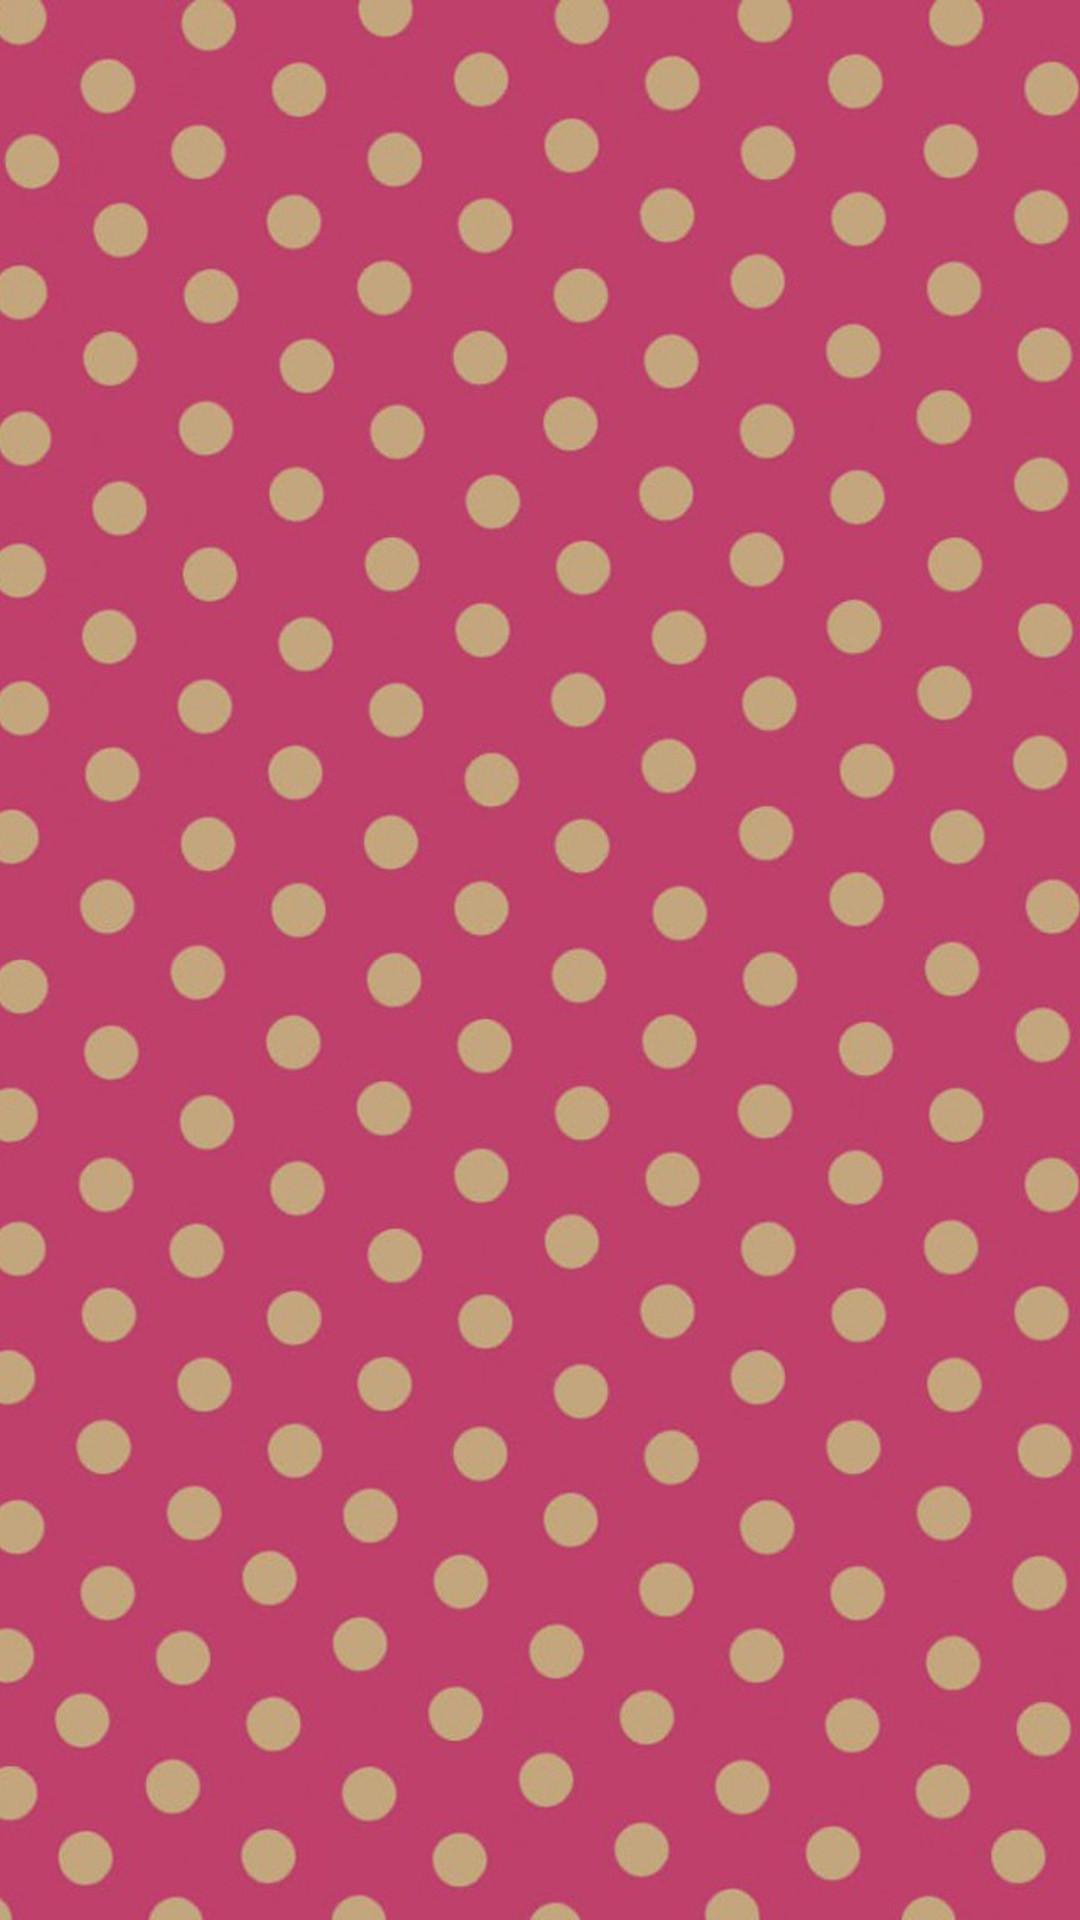 1080x1920 Polka Dot pattern Galaxy S5 Wallpapers